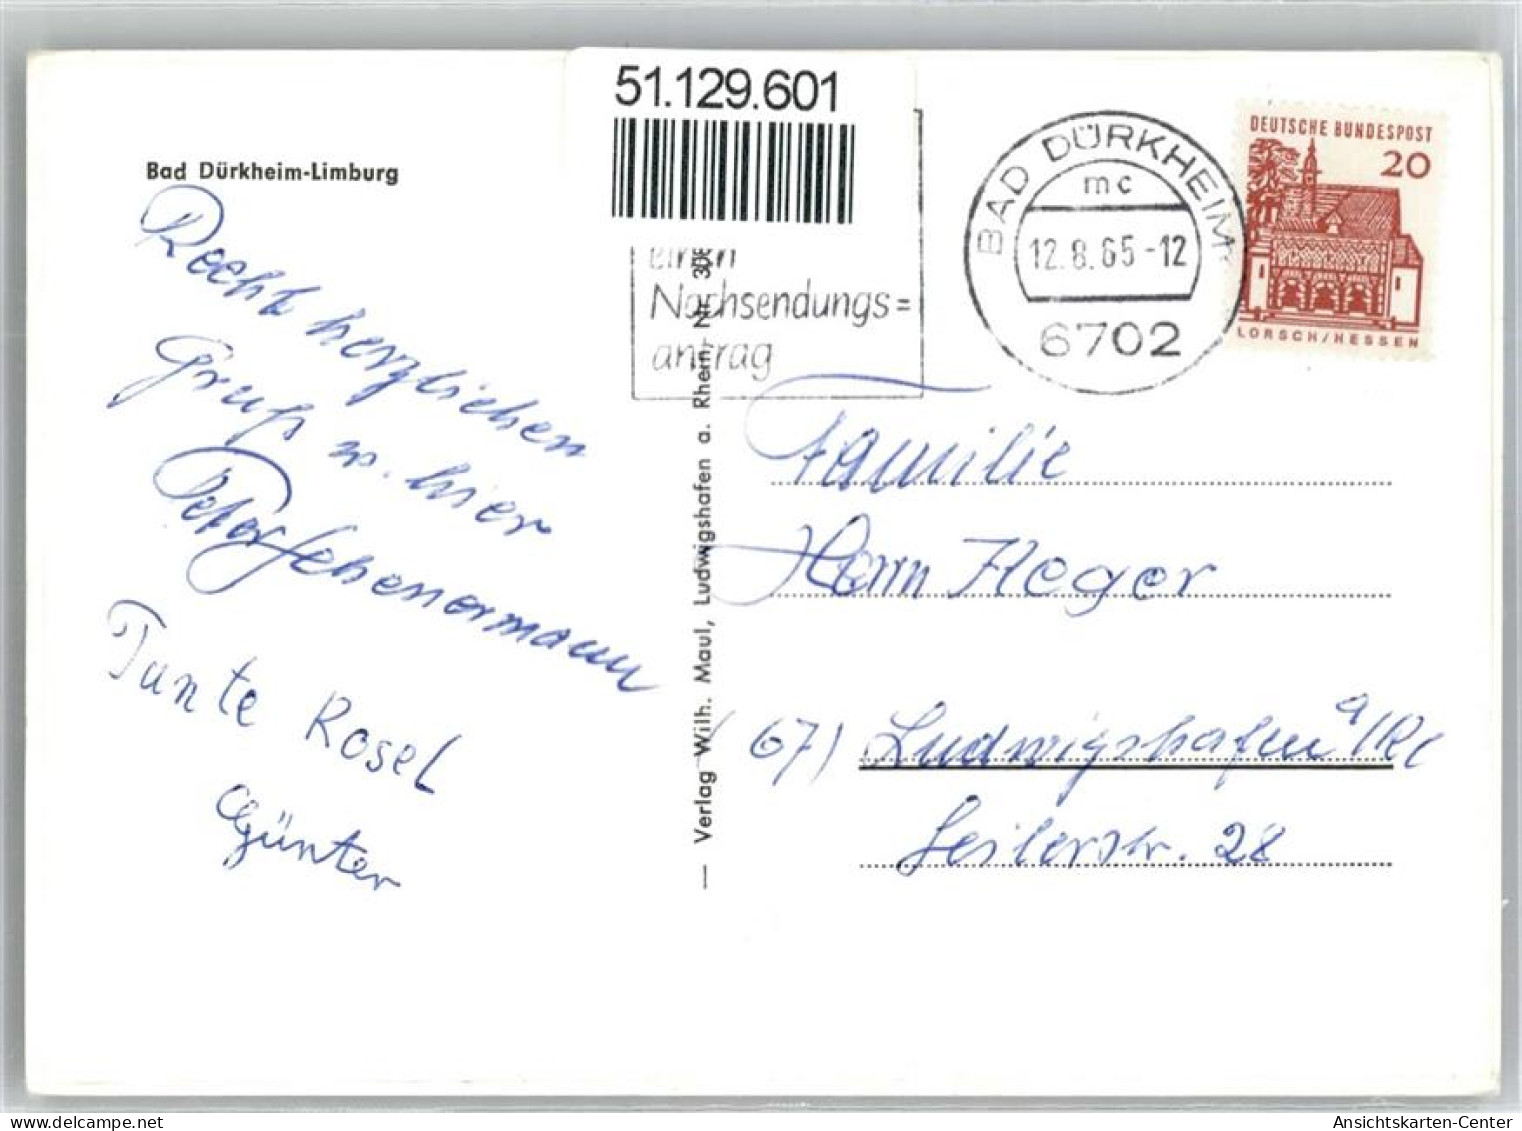 51129601 - Bad Duerkheim - Bad Duerkheim